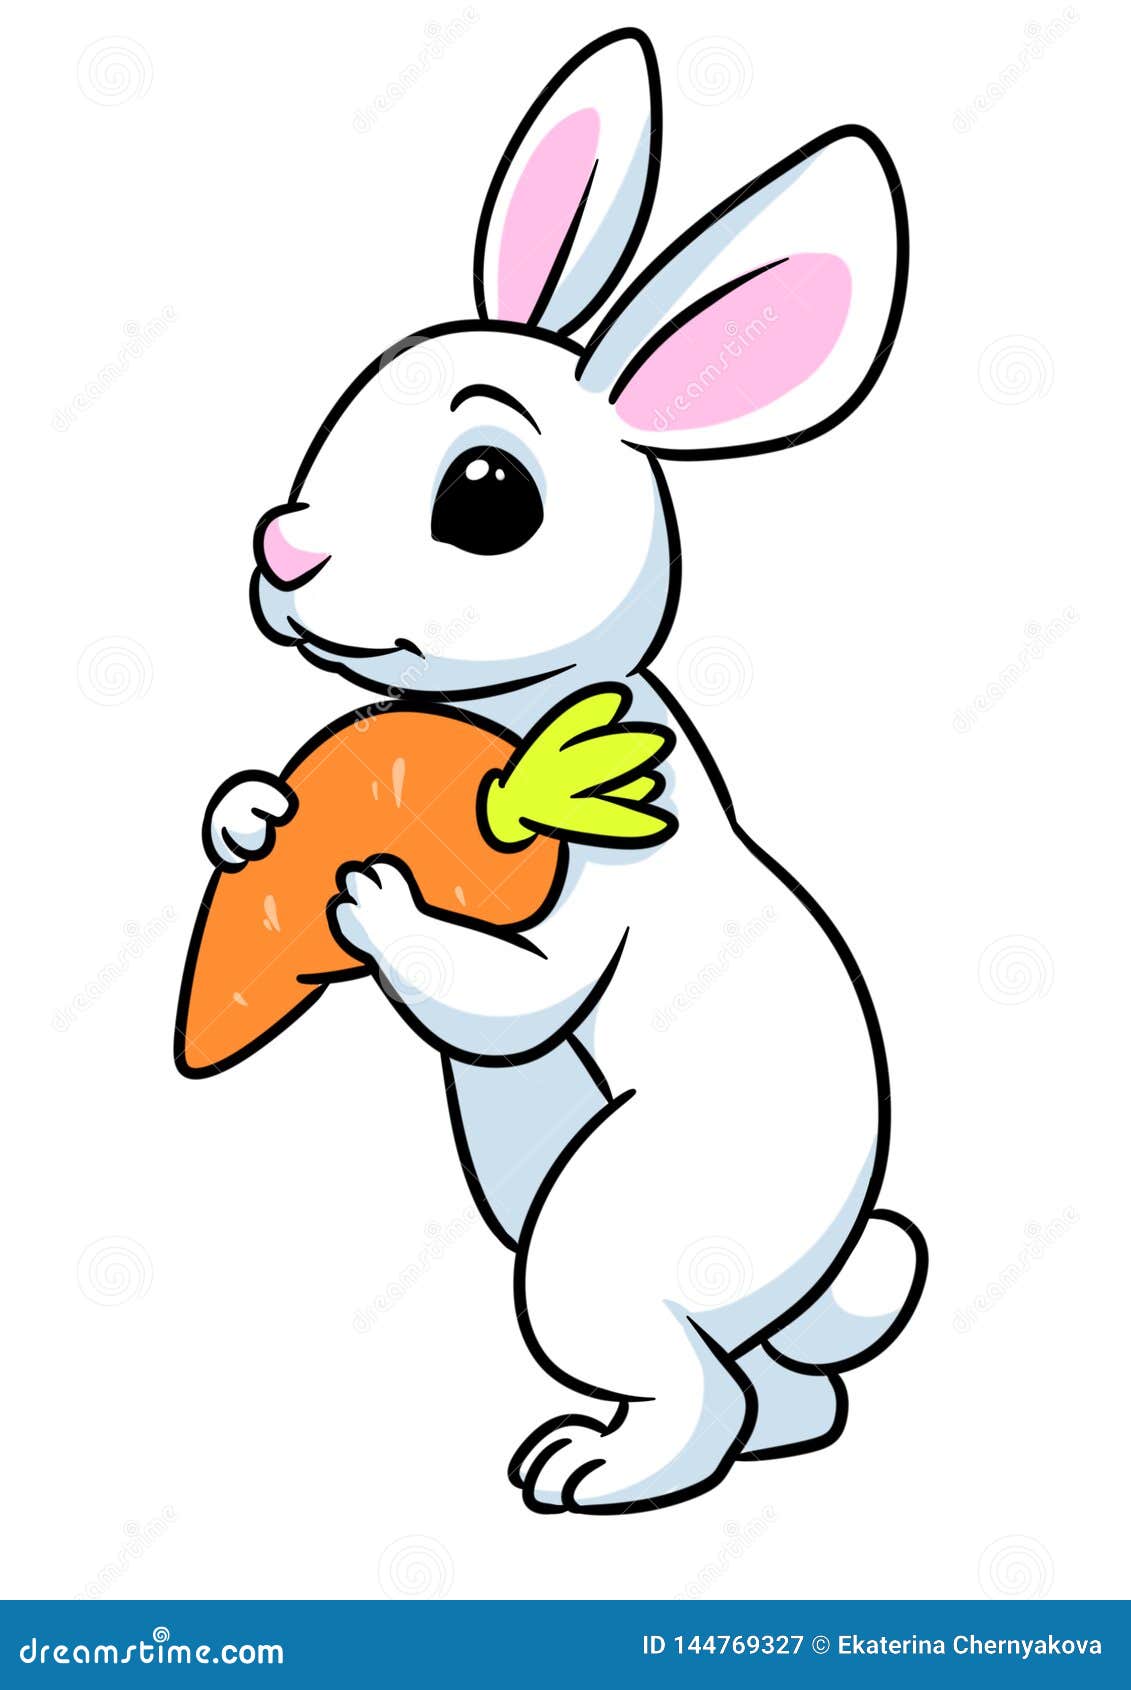 White Rabbit Carrot Animal Character Illustration Stock Illustration -  Illustration of bunny, rodent: 144769327